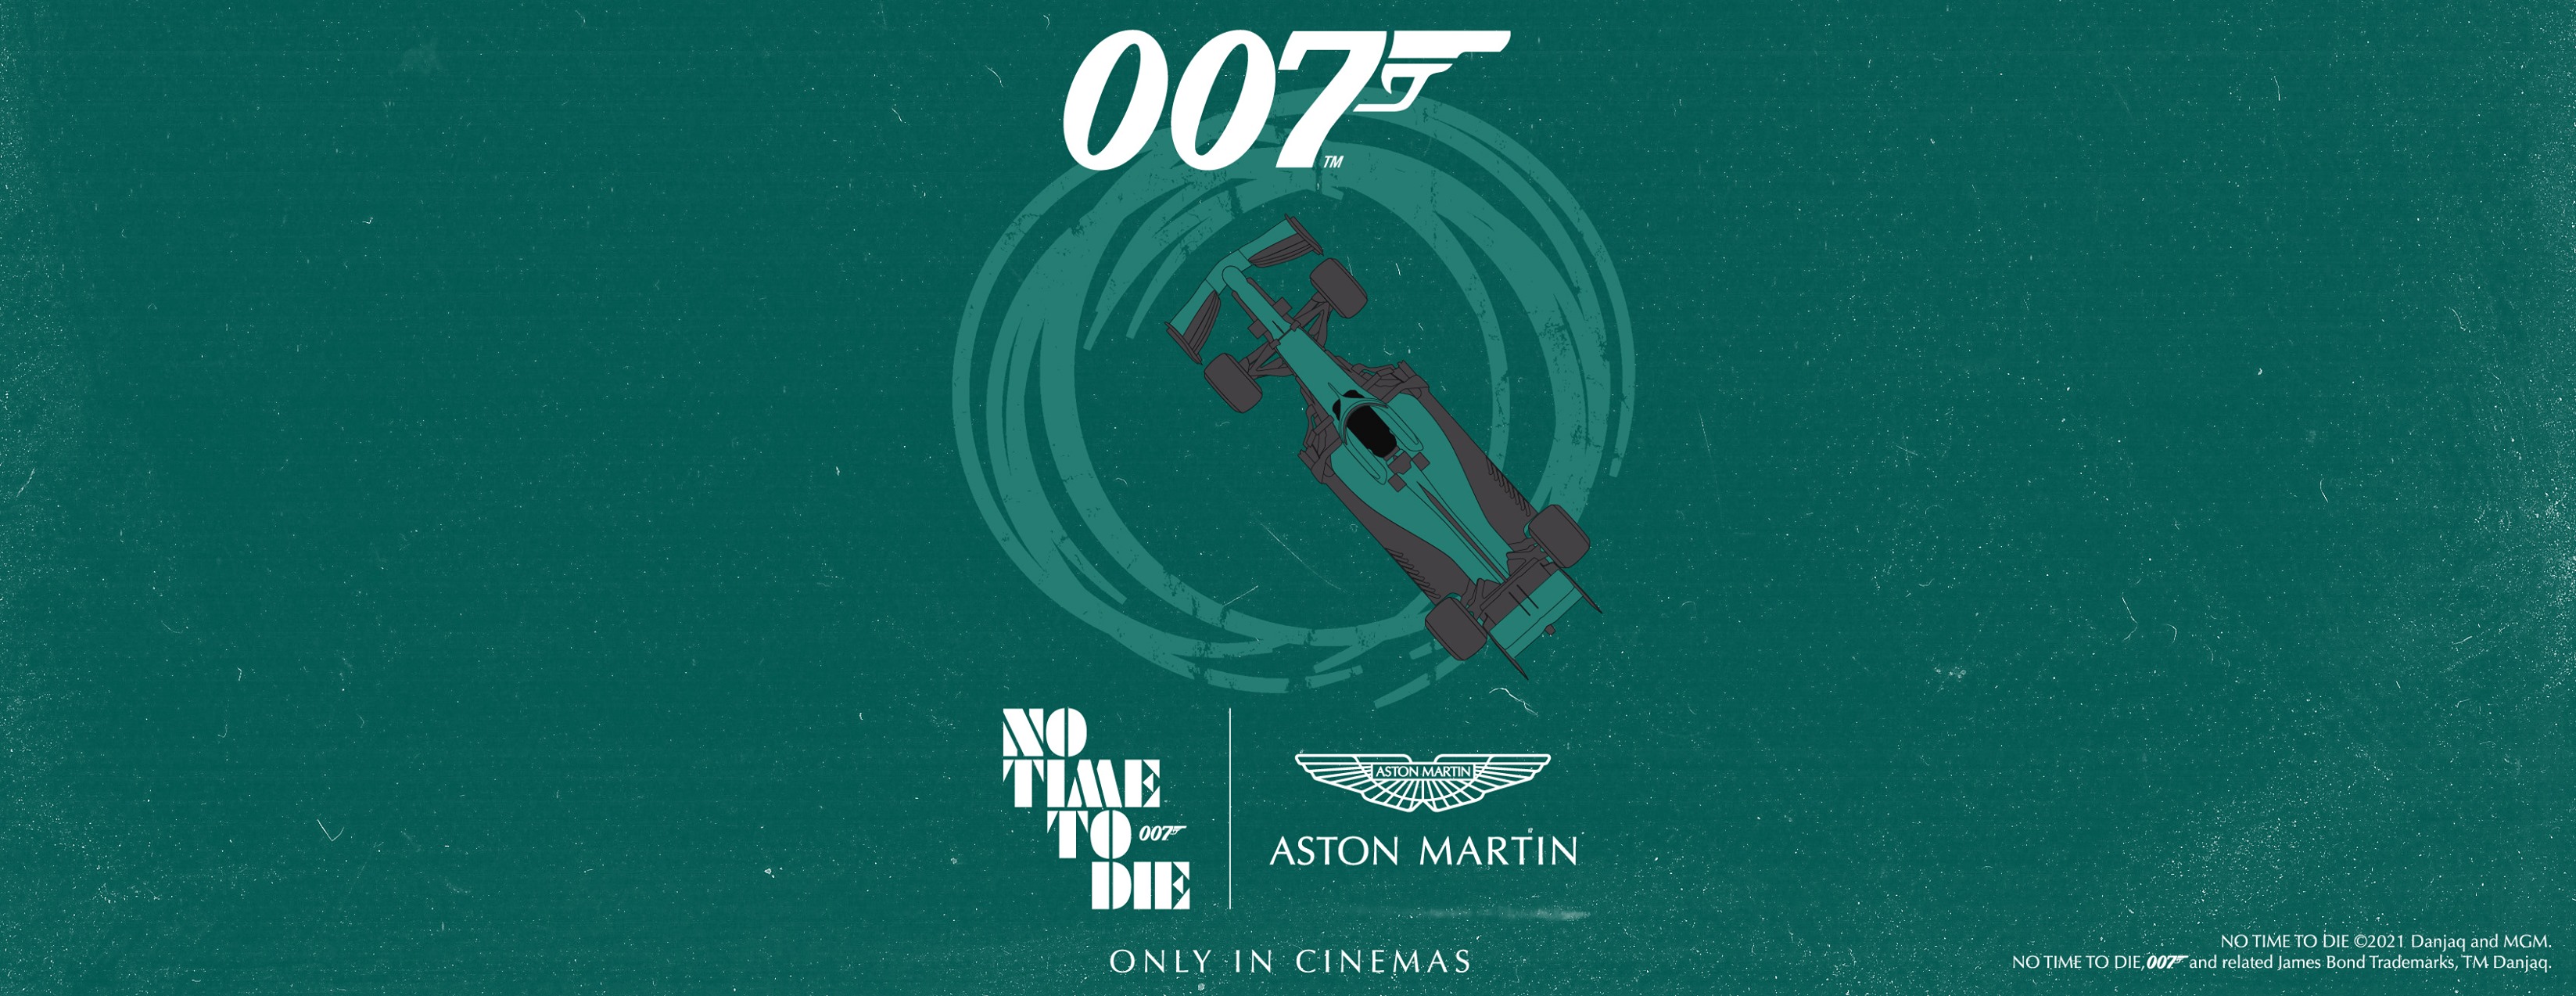 aston martin 007 film art2.jpg